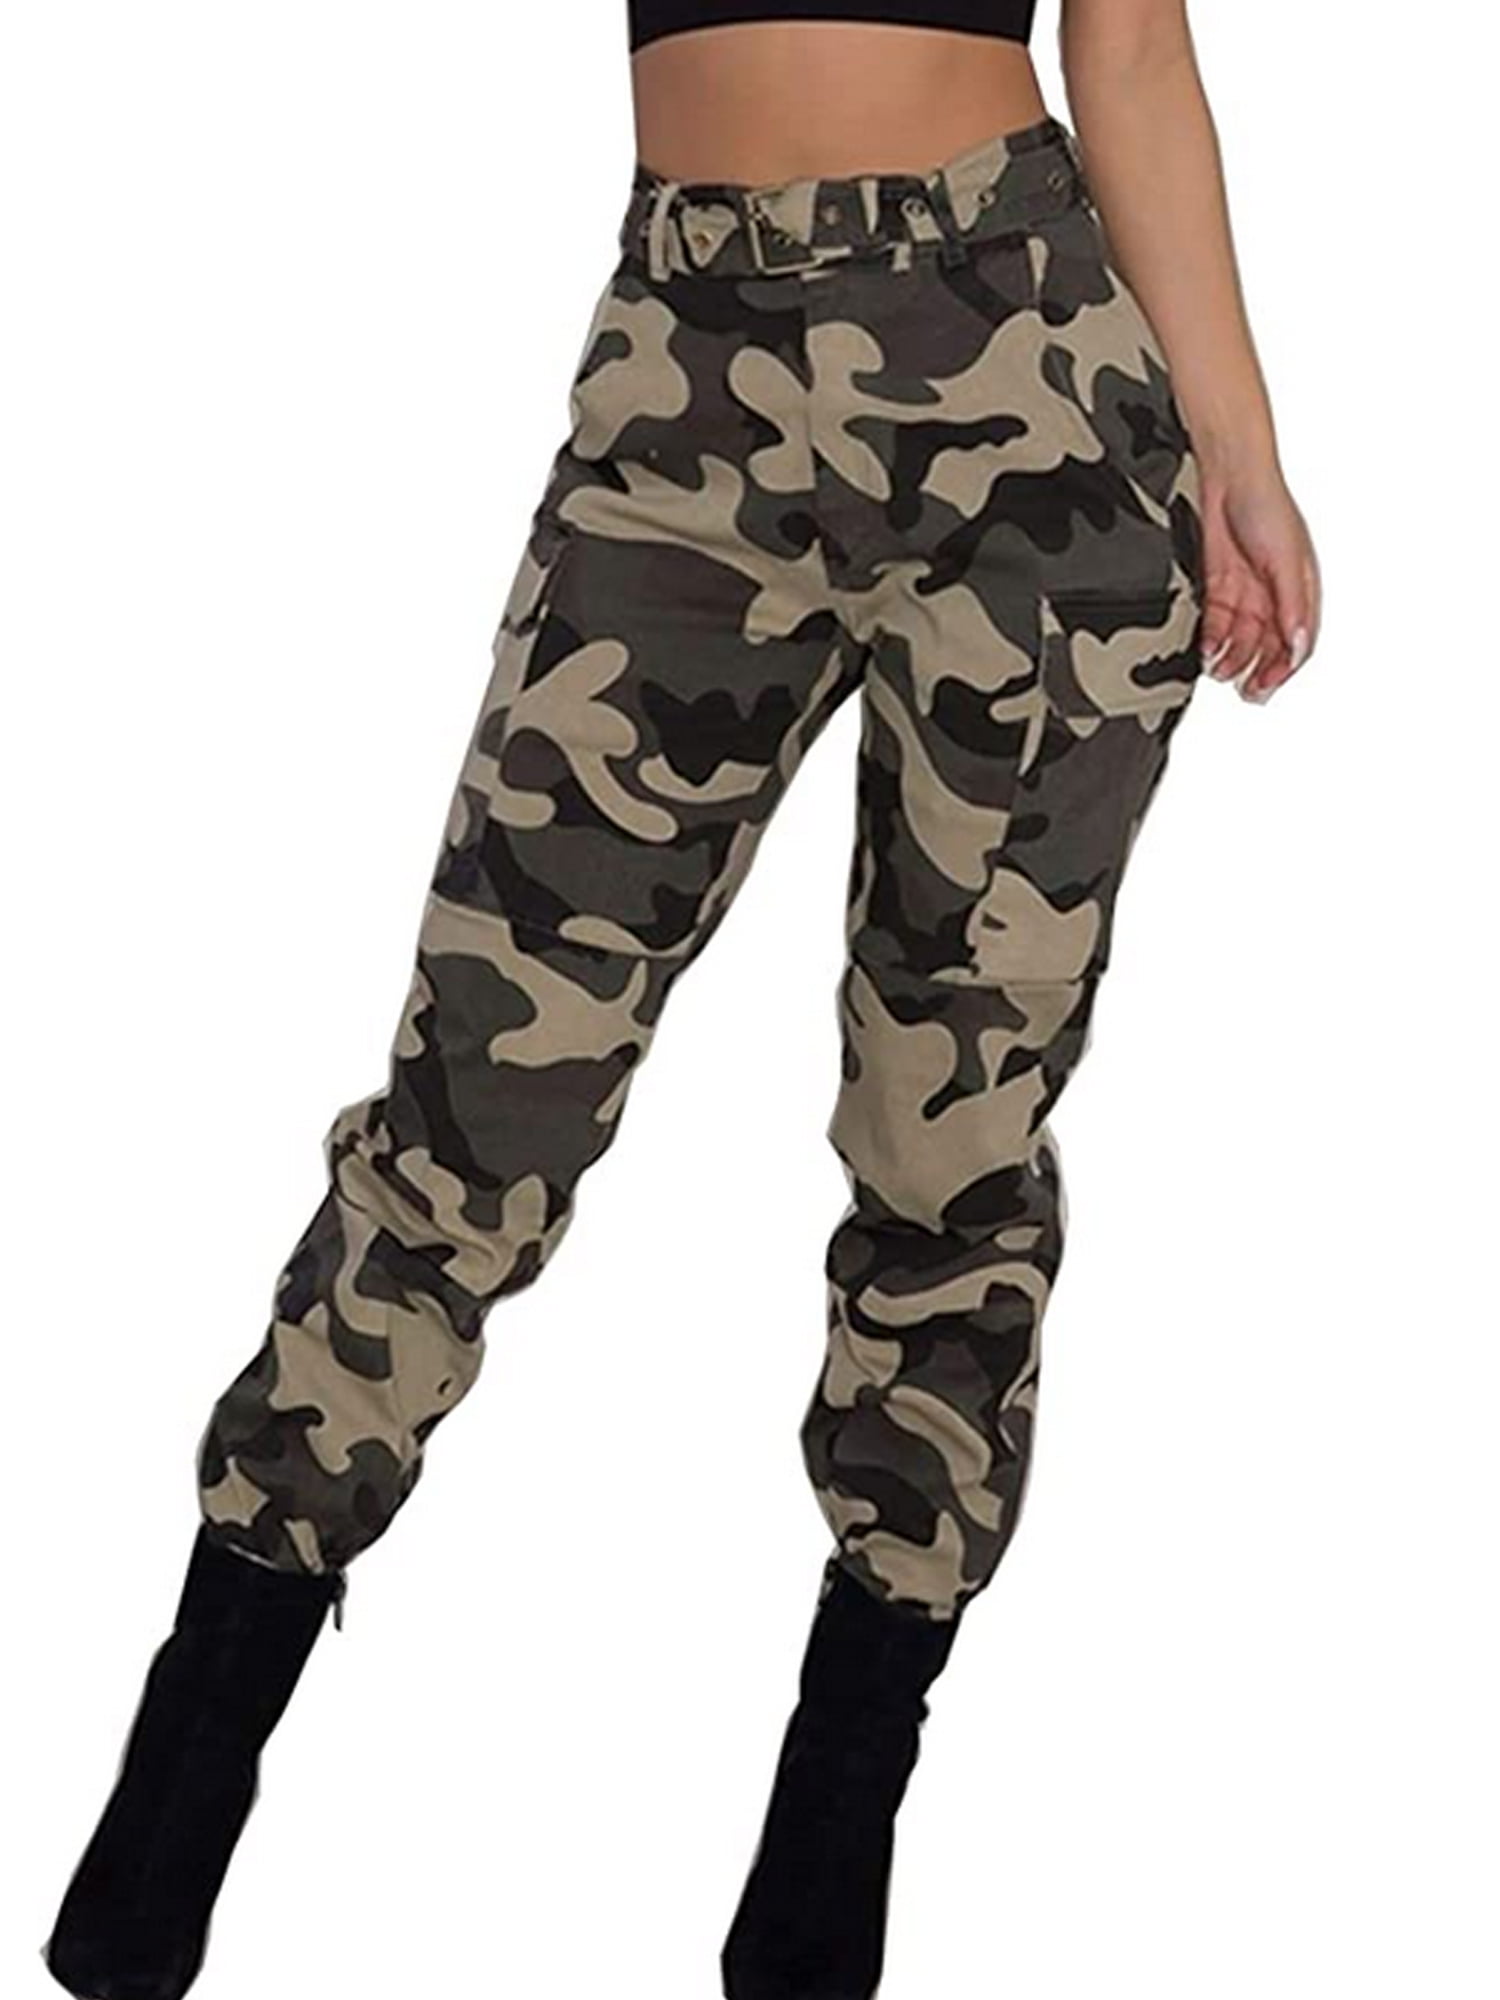 Army Camo Pants Womens - Army Military